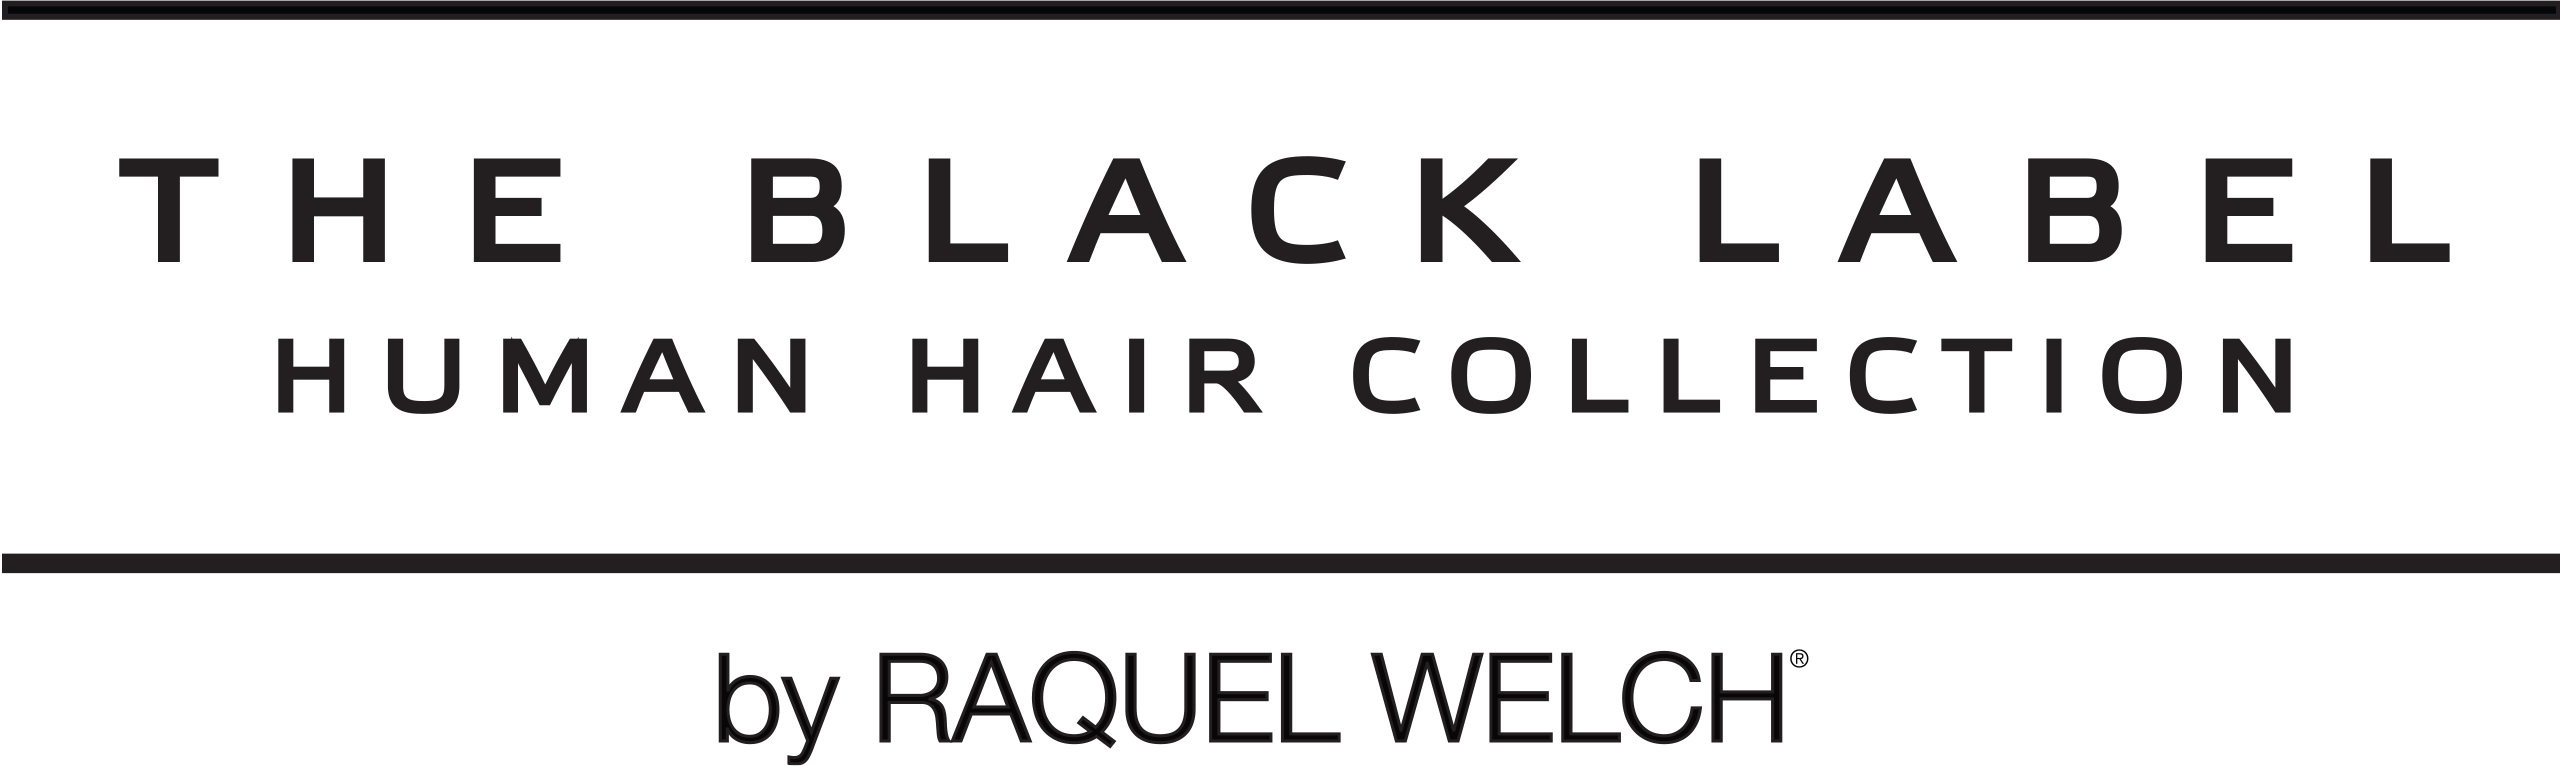 Raquel Welch Black Label Human Hair Collection logo